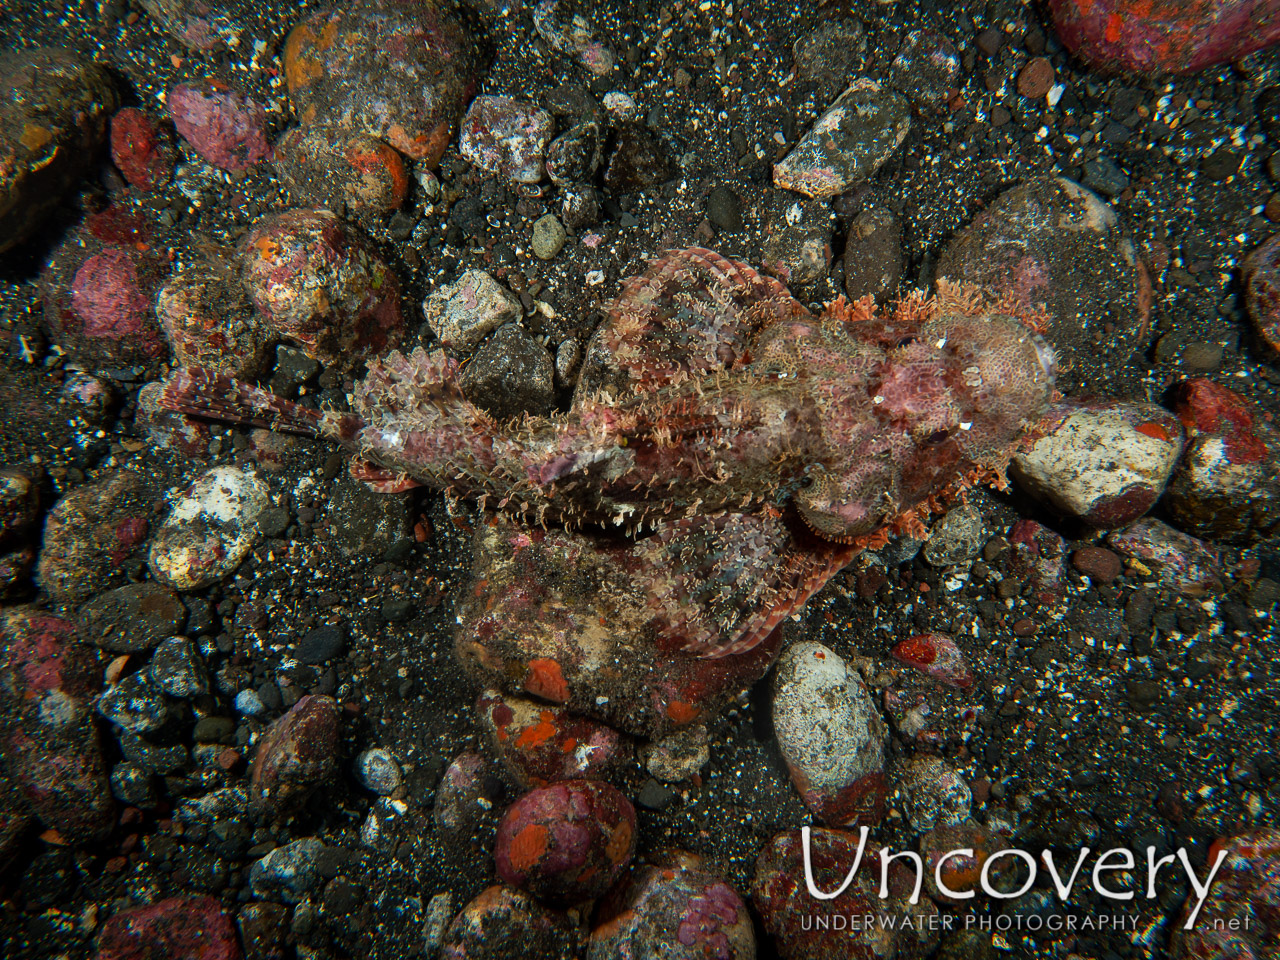 Tassled Scorpionfish (scorpaenopsis Oxycephala), photo taken in Indonesia, Bali, Tulamben, Liberty Wreck